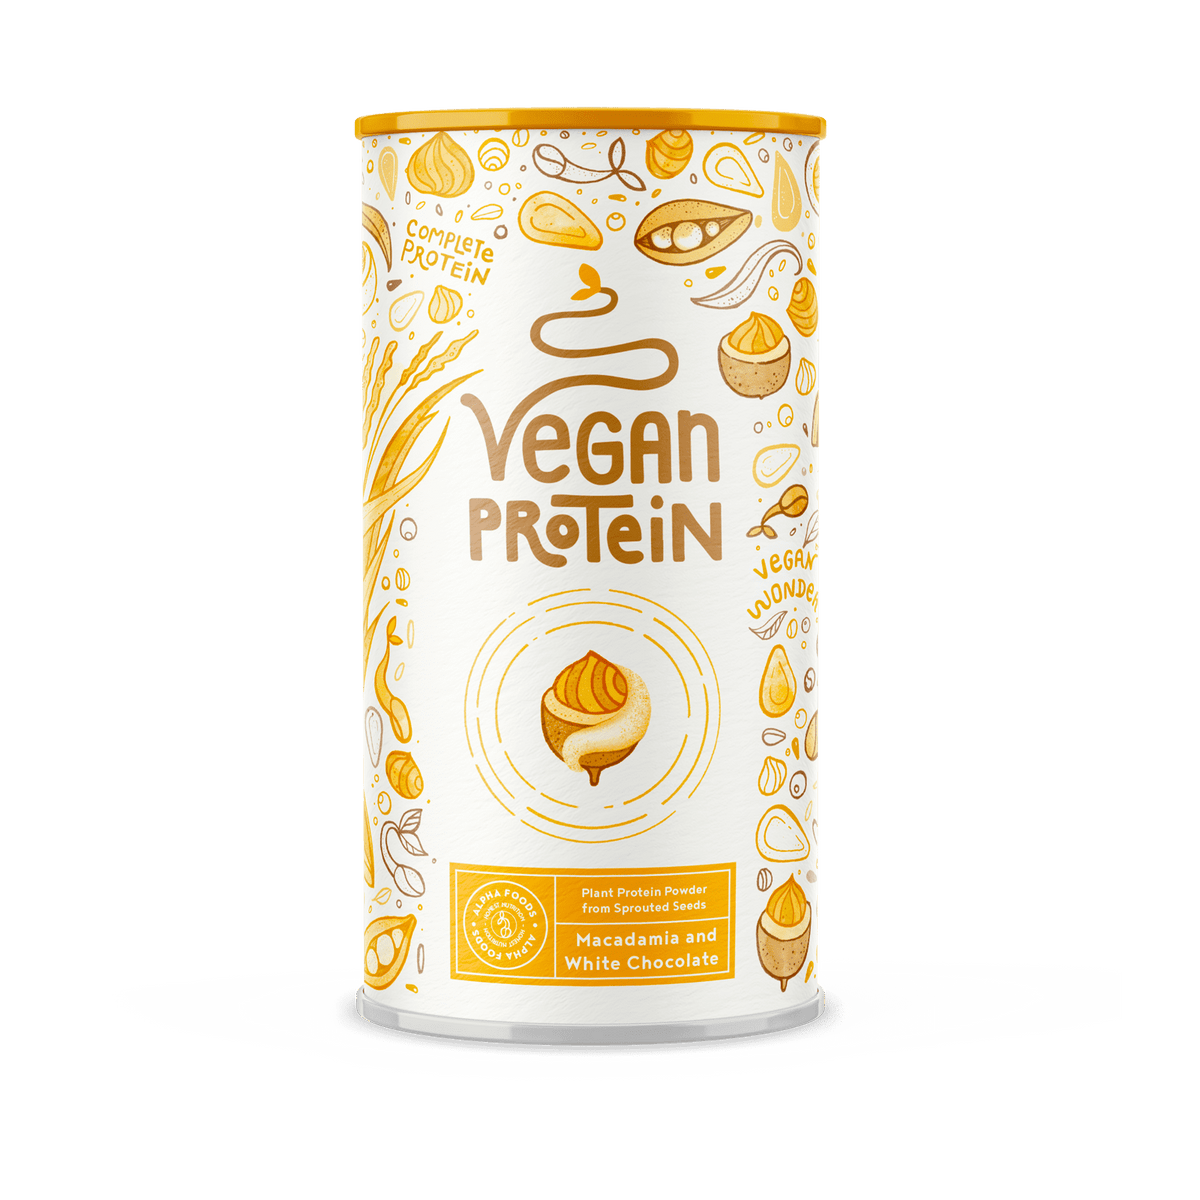 Proteína vegana en polvo - Chocolate blanco y Macadamia